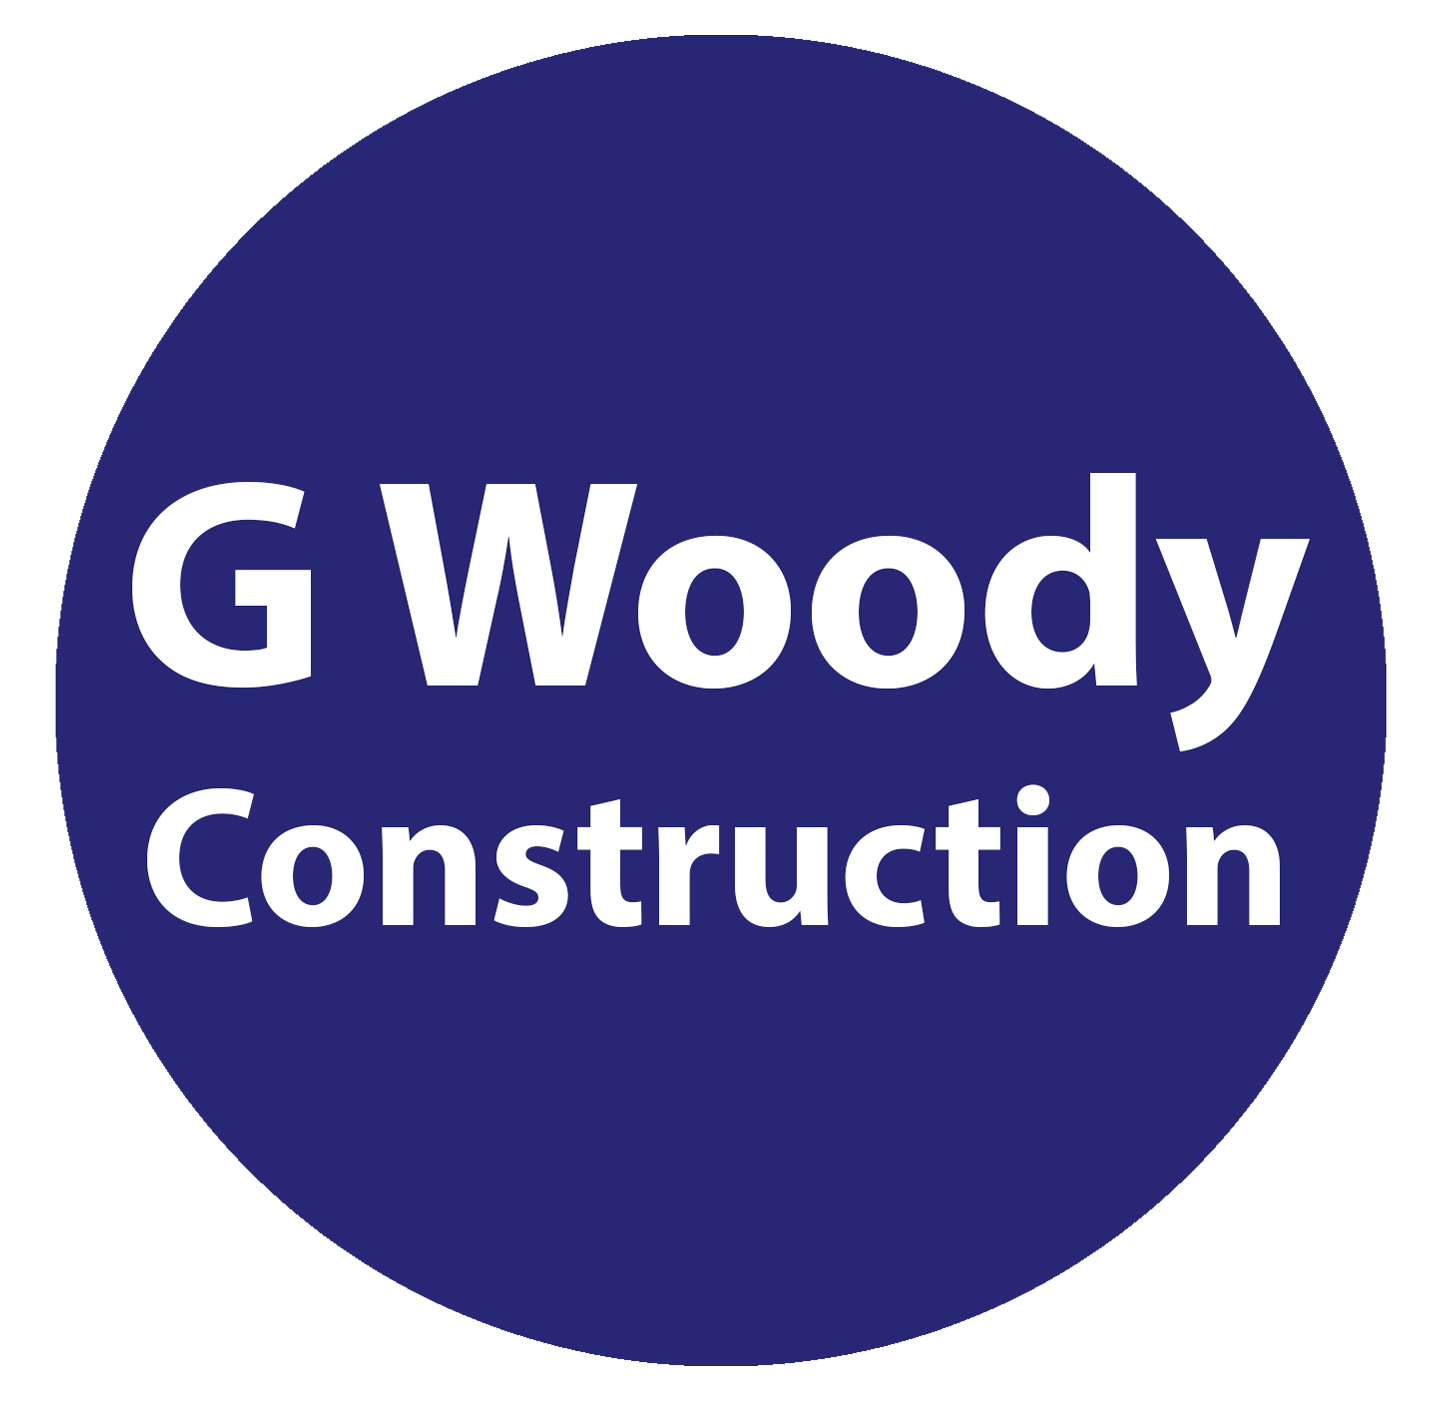 G Woody Construction